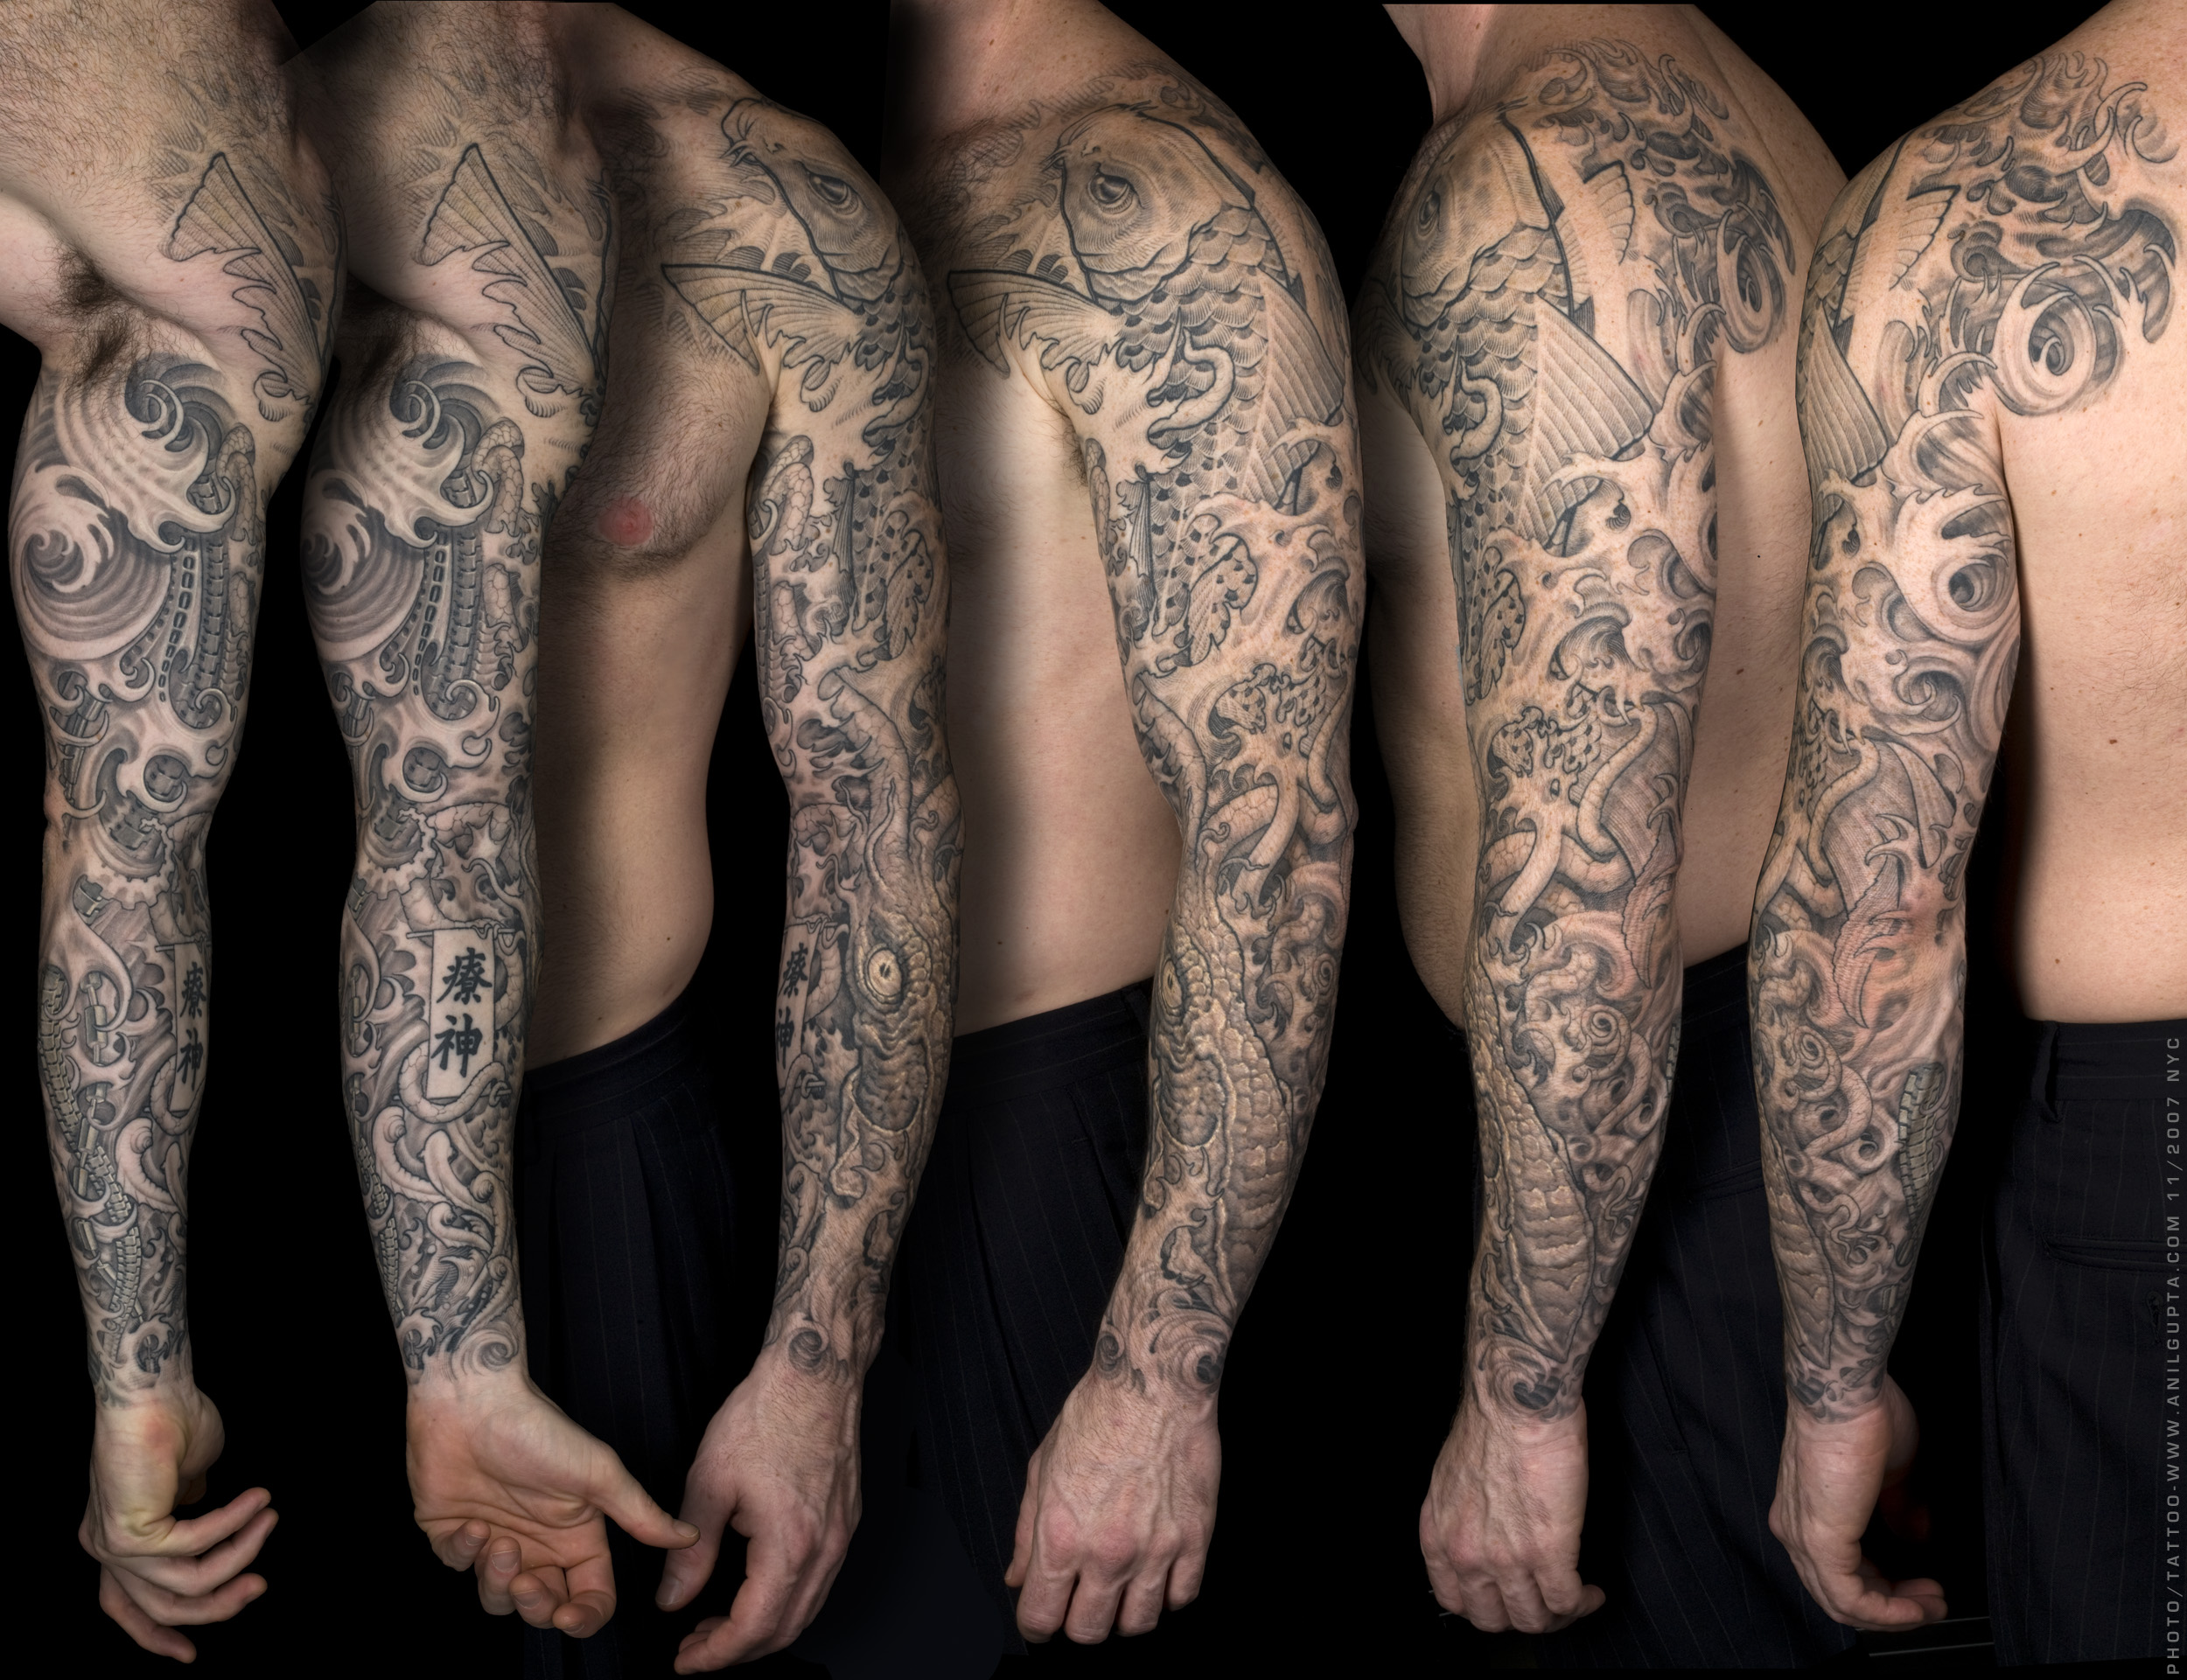 Swapnil'S TATTOO STUDIO - Half Sleeve Completed #tattoo #design #owltattoo  #with #mountains #custom_work #refferee #owls #mountain #owl_lovers #tattoo  #tattoos #sts #rbart #tattooed #tattoo #tattoos #tattooistic #art #artist # artistic #artistwork ...